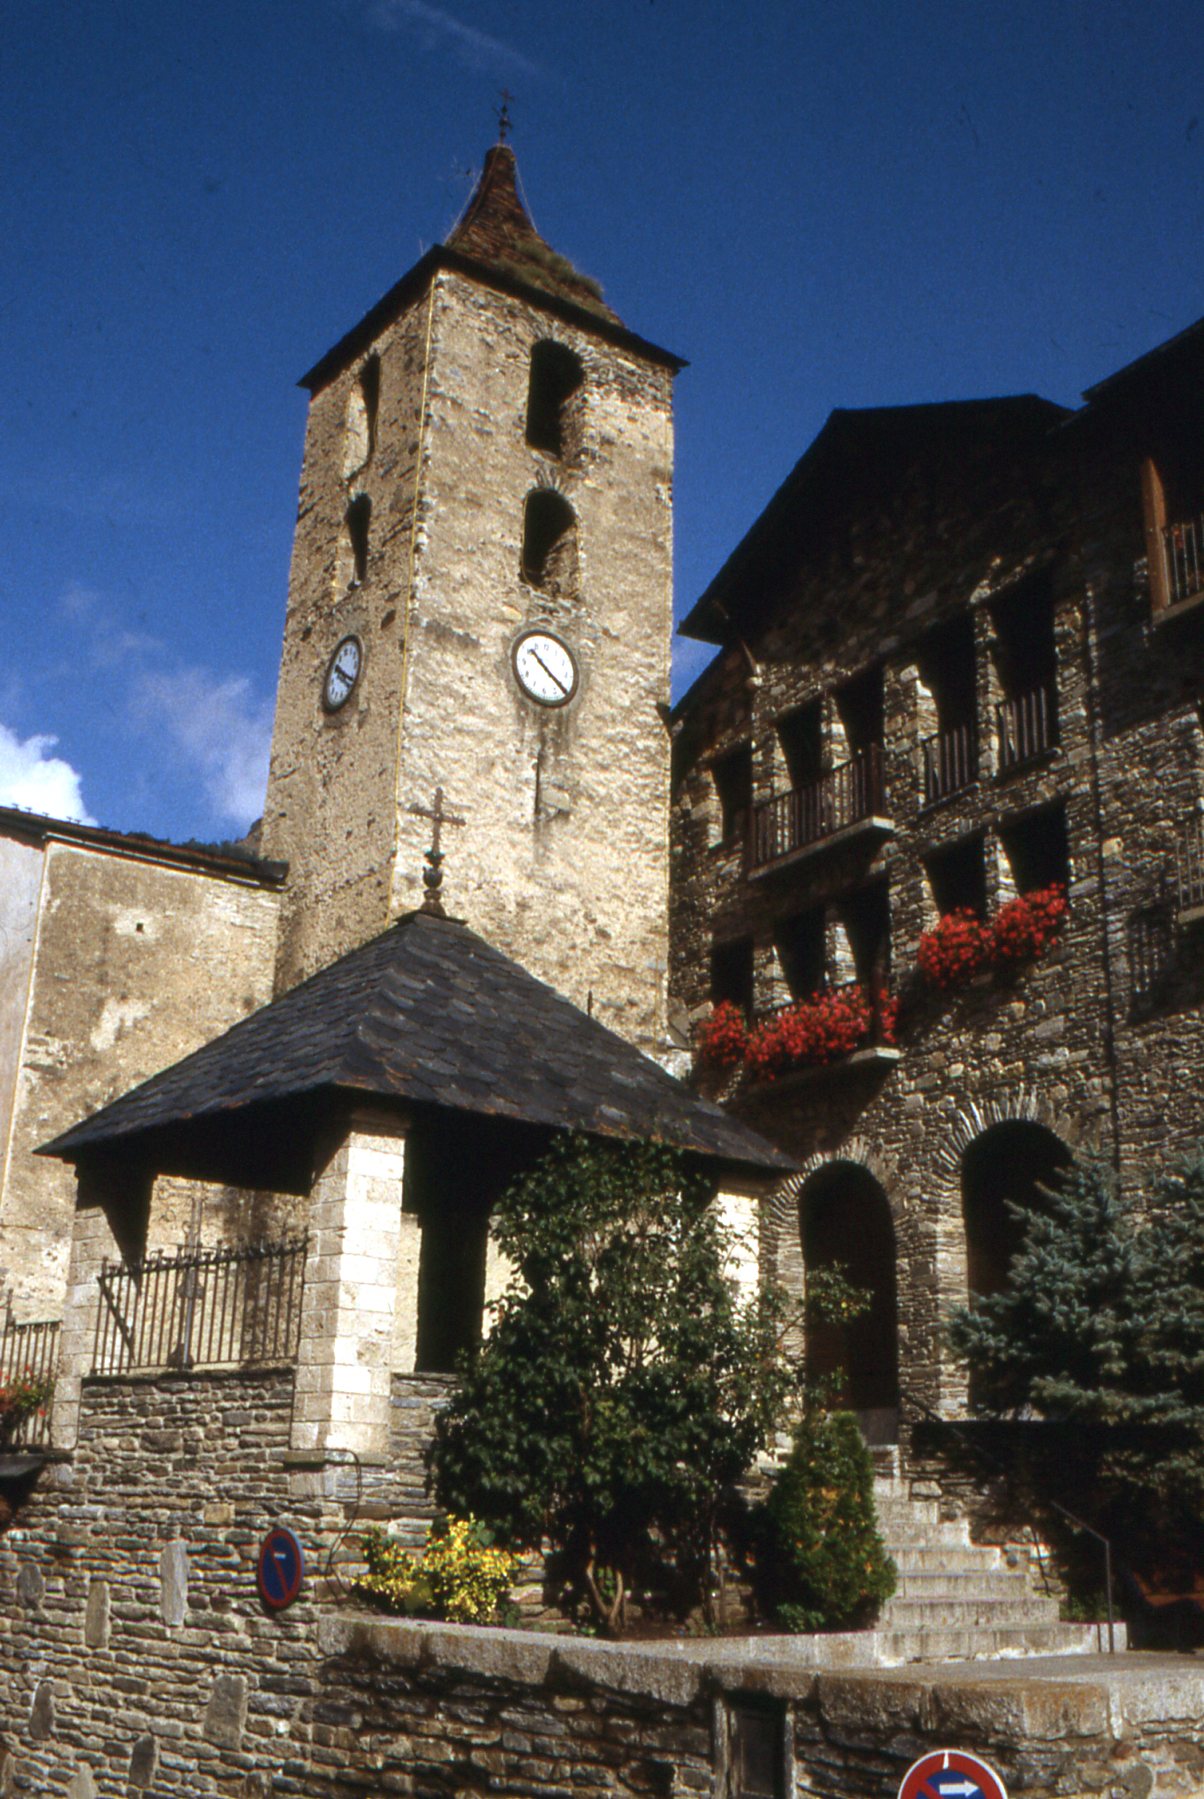 Despite modernization elsewhere, the center of Ordino still typifies the old Andorran mountain village.